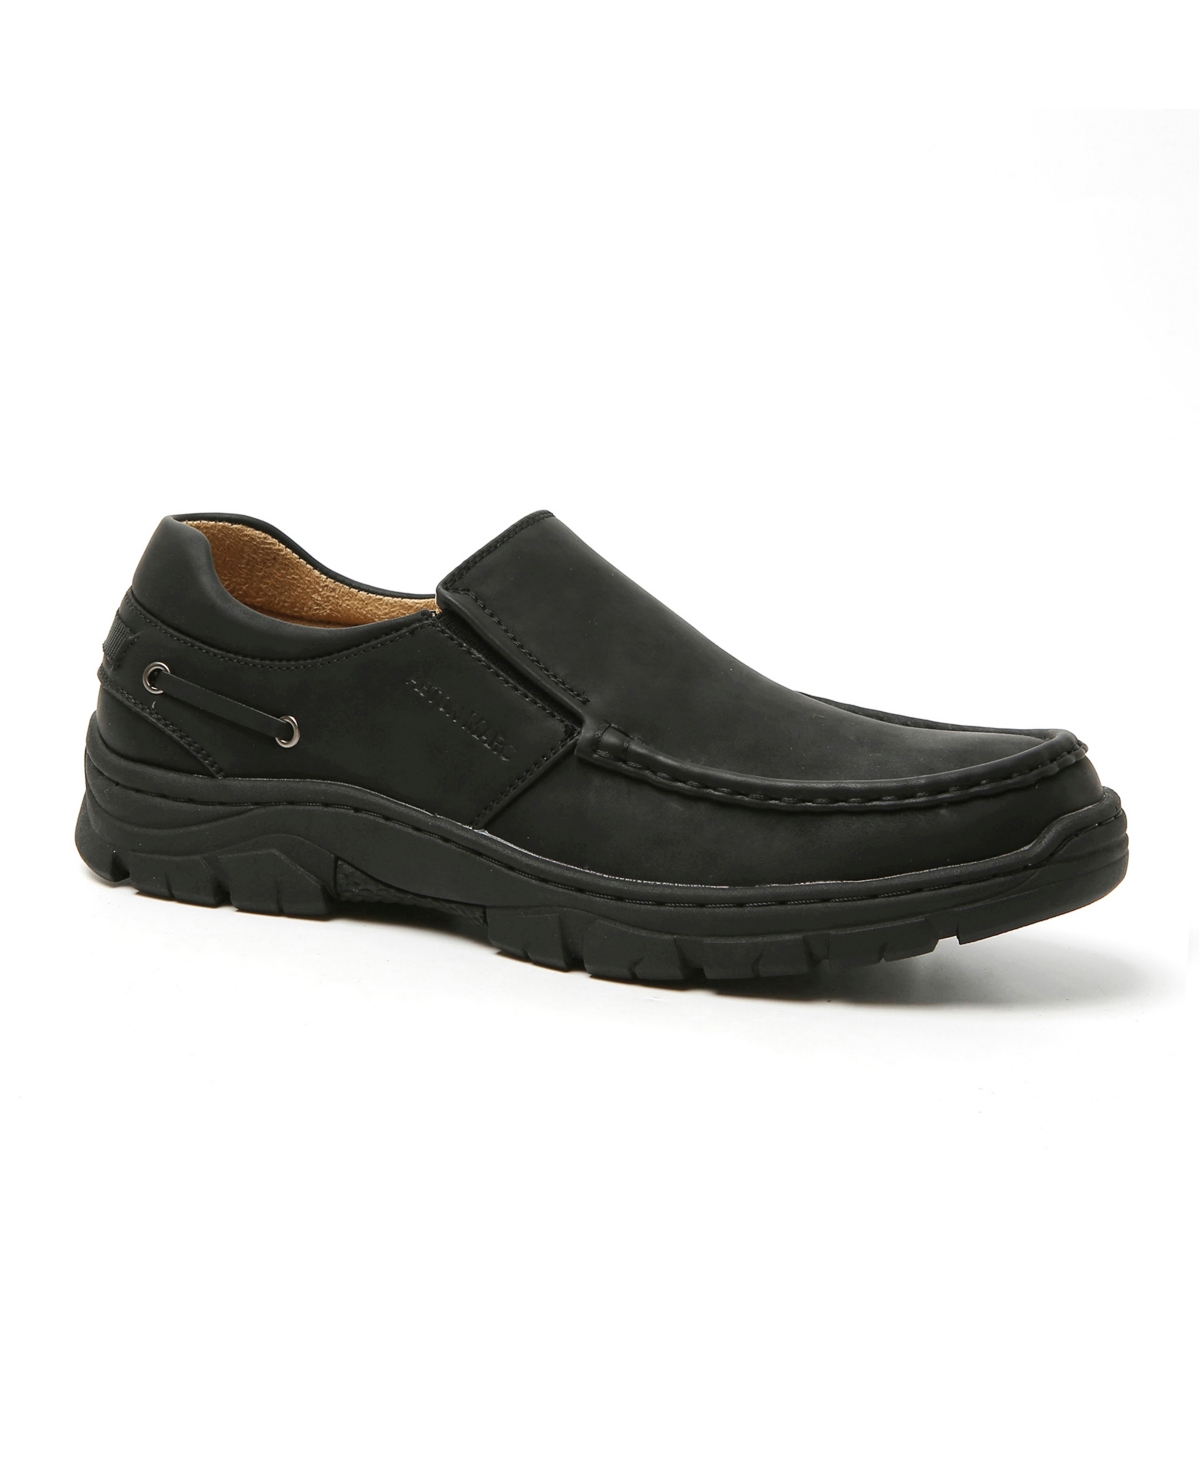 Men's Slip On Comfort Casual Shoes - Tan